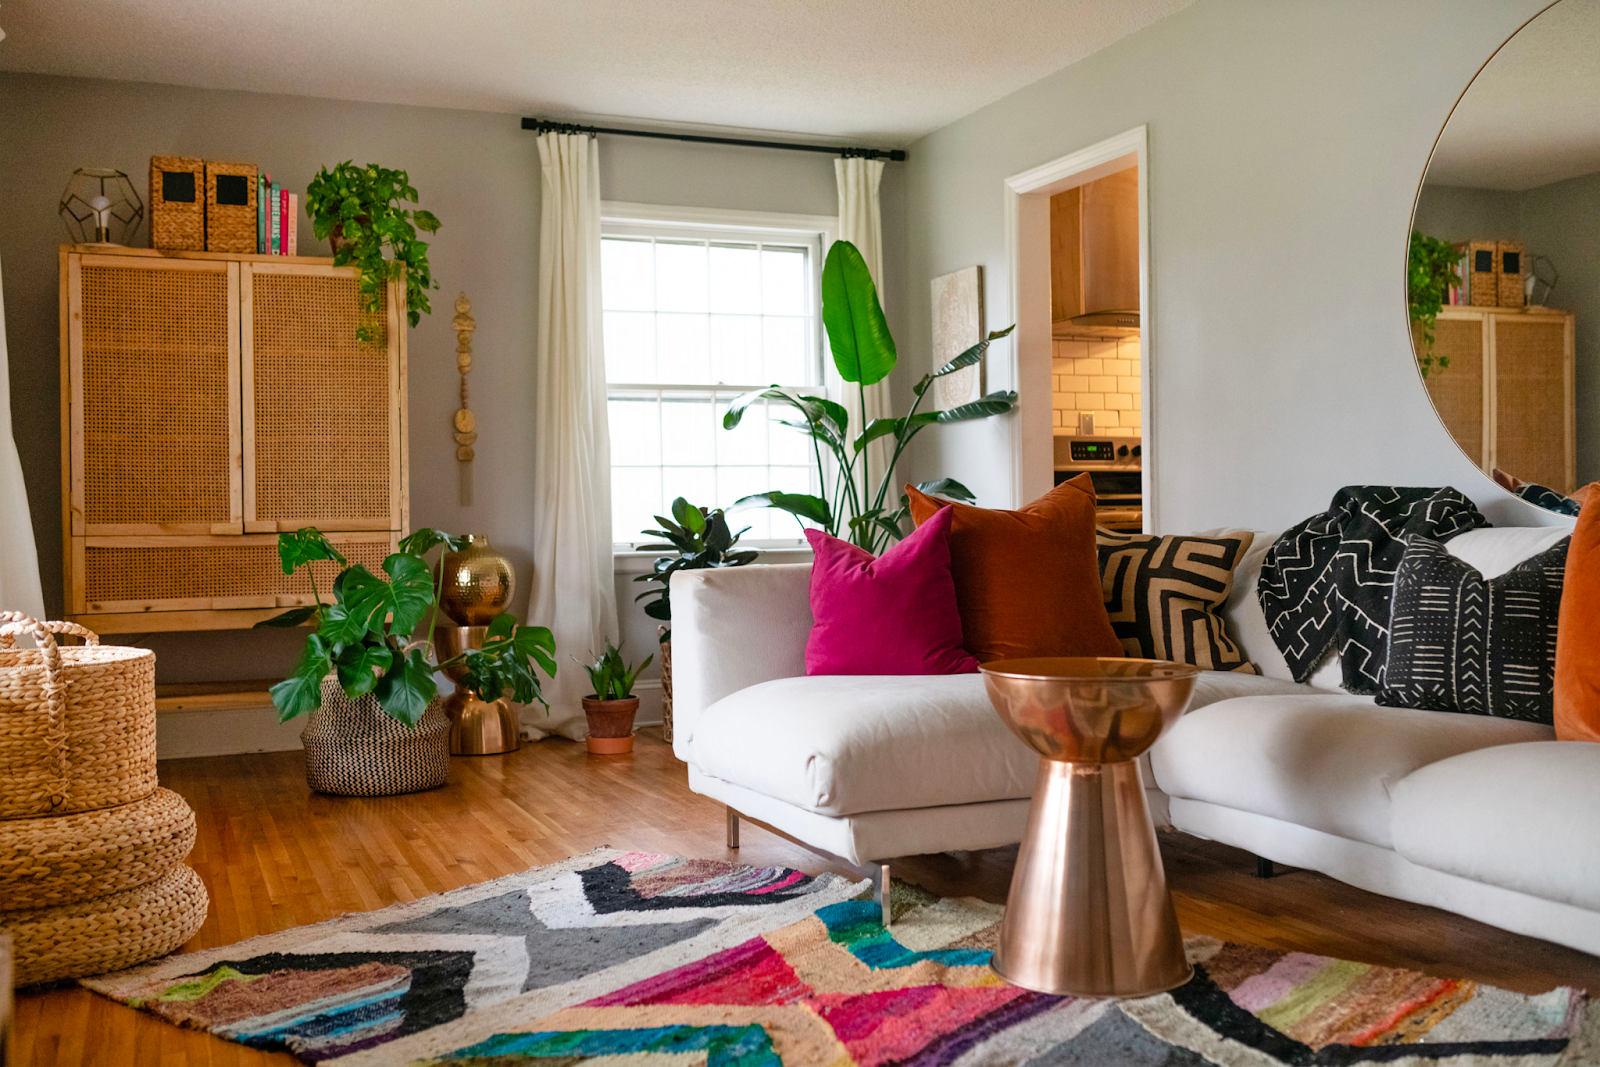 Choose textiles or artwork to spread boho style home decor